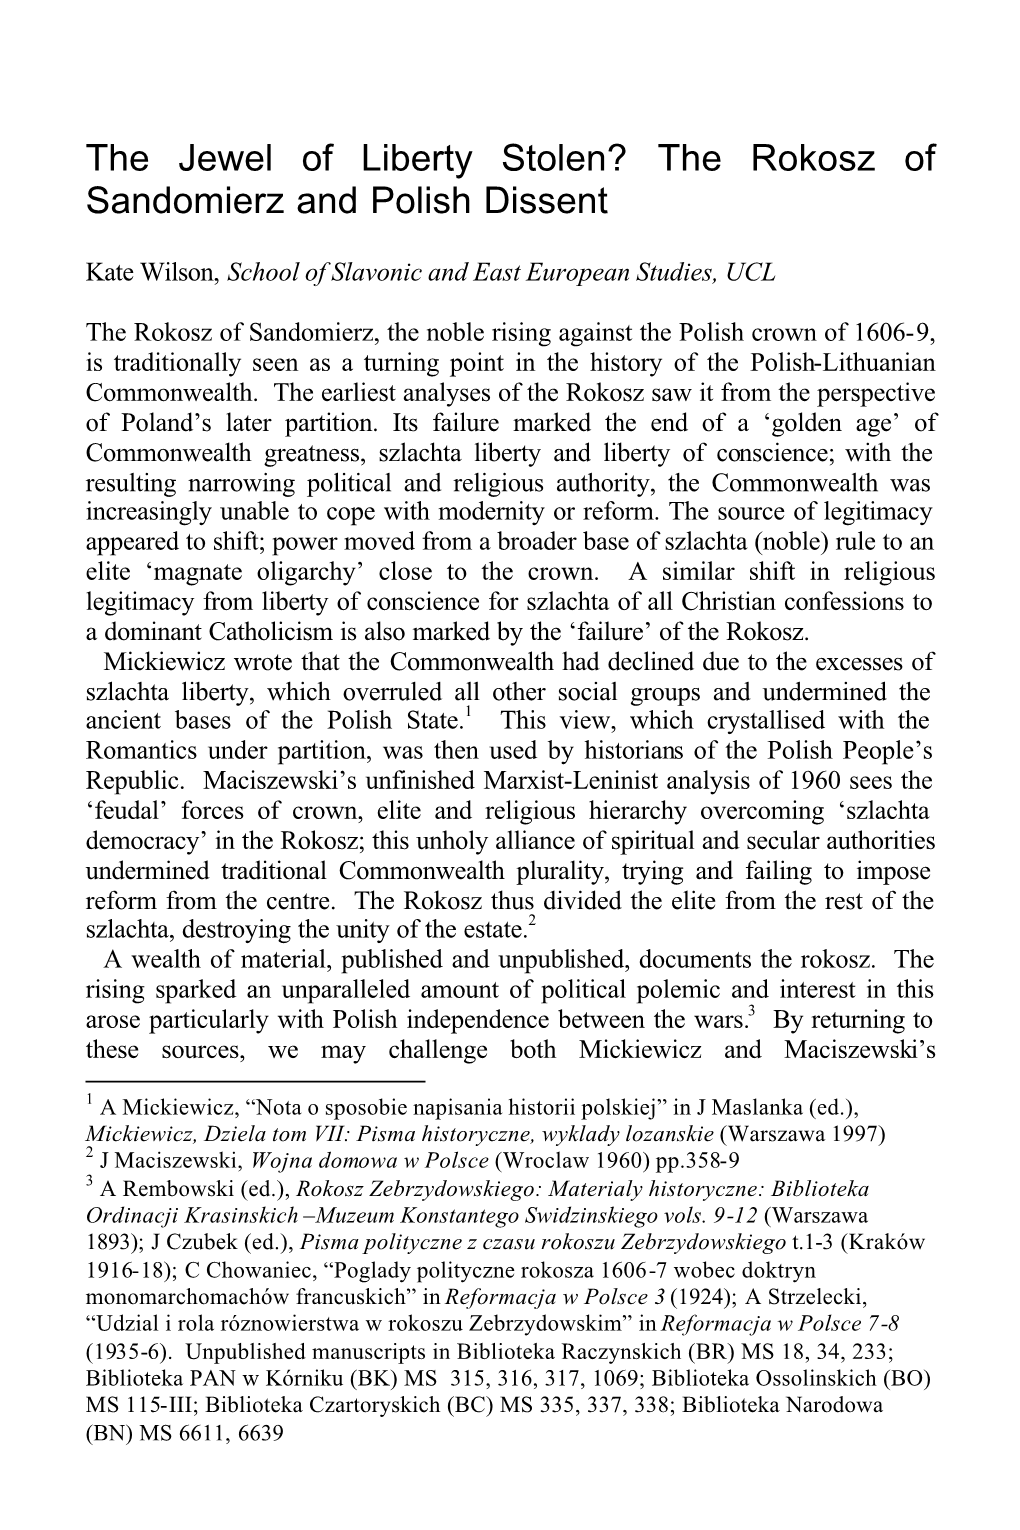 The Rokosz of Sandomierz and Polish Dissent